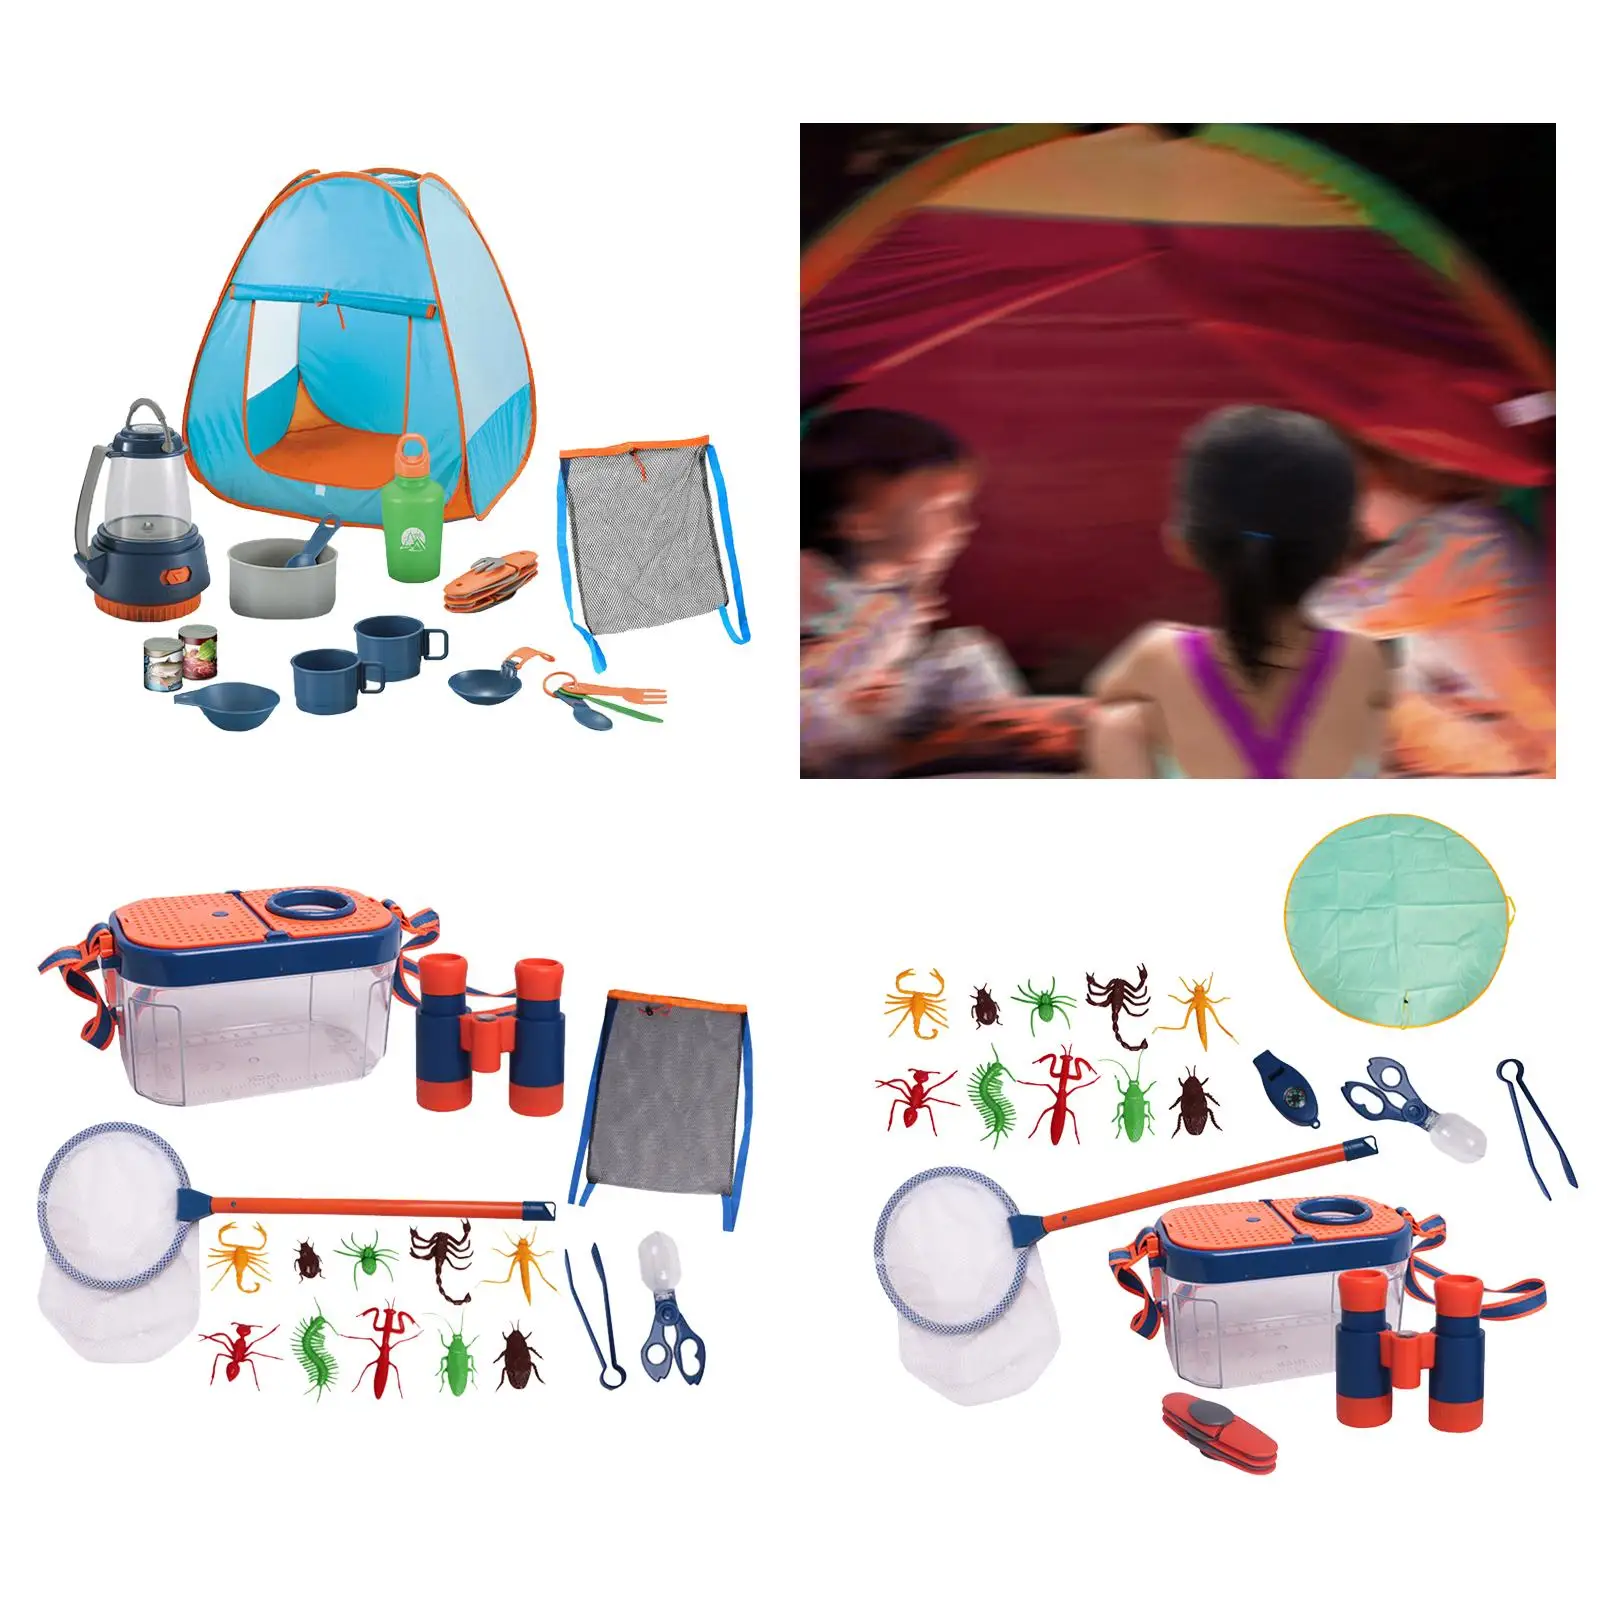 Kids Pretend Play Toys Set Children Outdoor Adventure Adventure Set Birthday Gift Educational Toys for Outdoor Boys Children